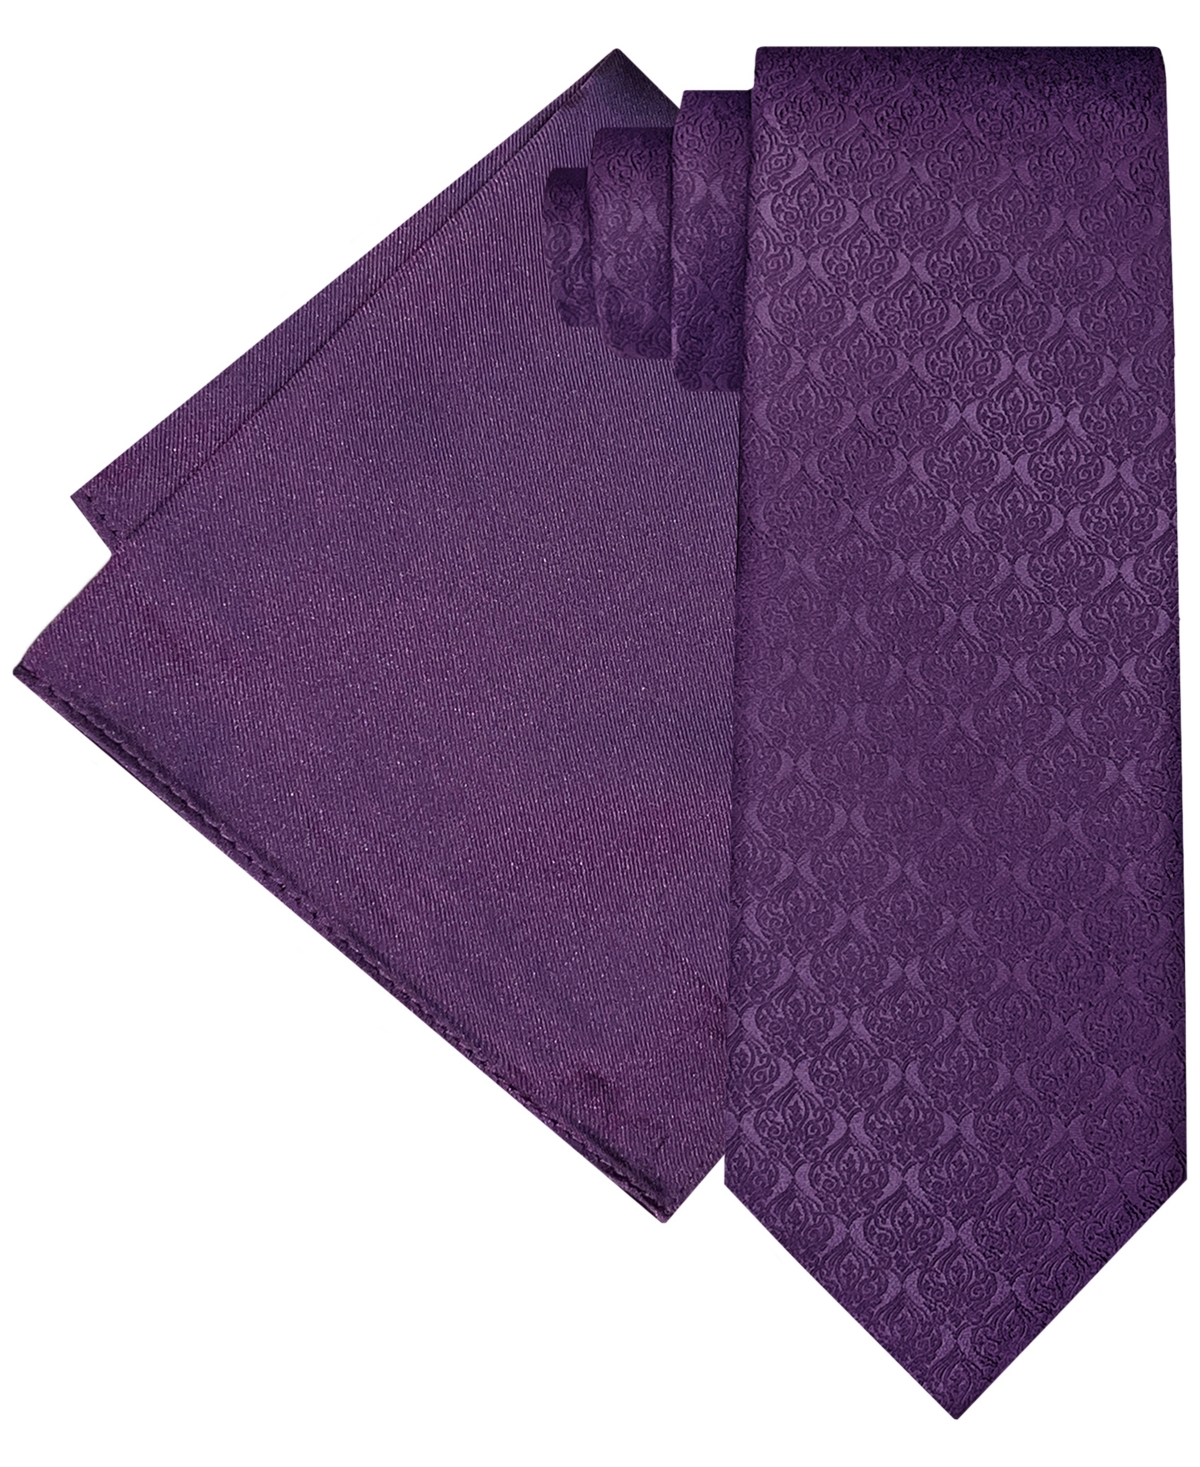 Men's Textured Tonal Tie & Solid Pocket Square Set - Plum